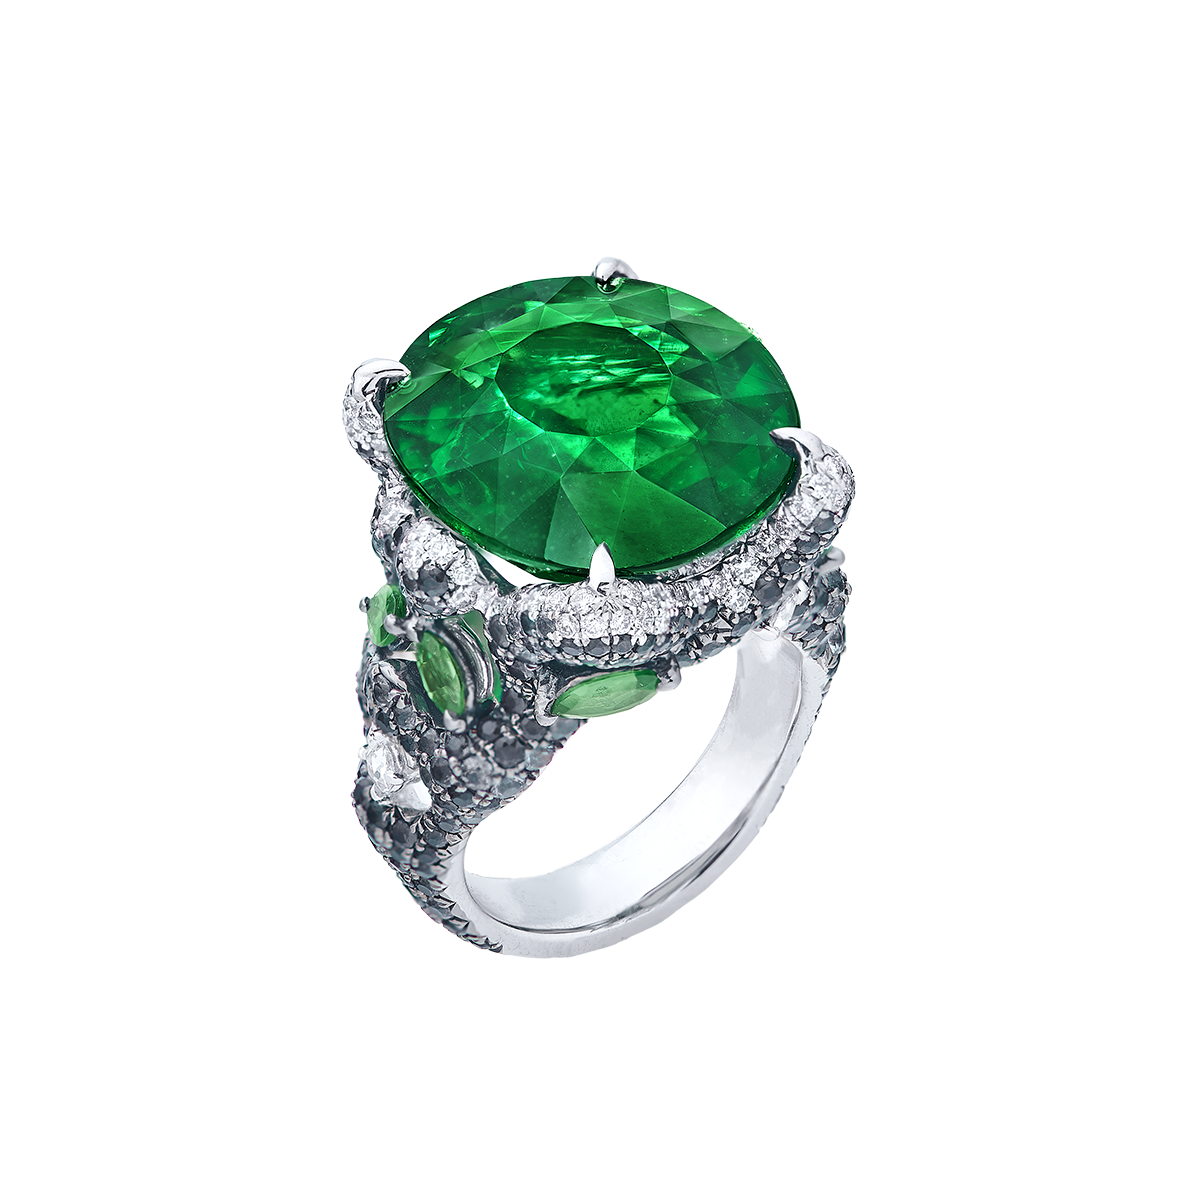 20.43克拉 艷彩沙弗萊鑽戒
Vivid Green Natural Tsavorite
and Diamond Ring